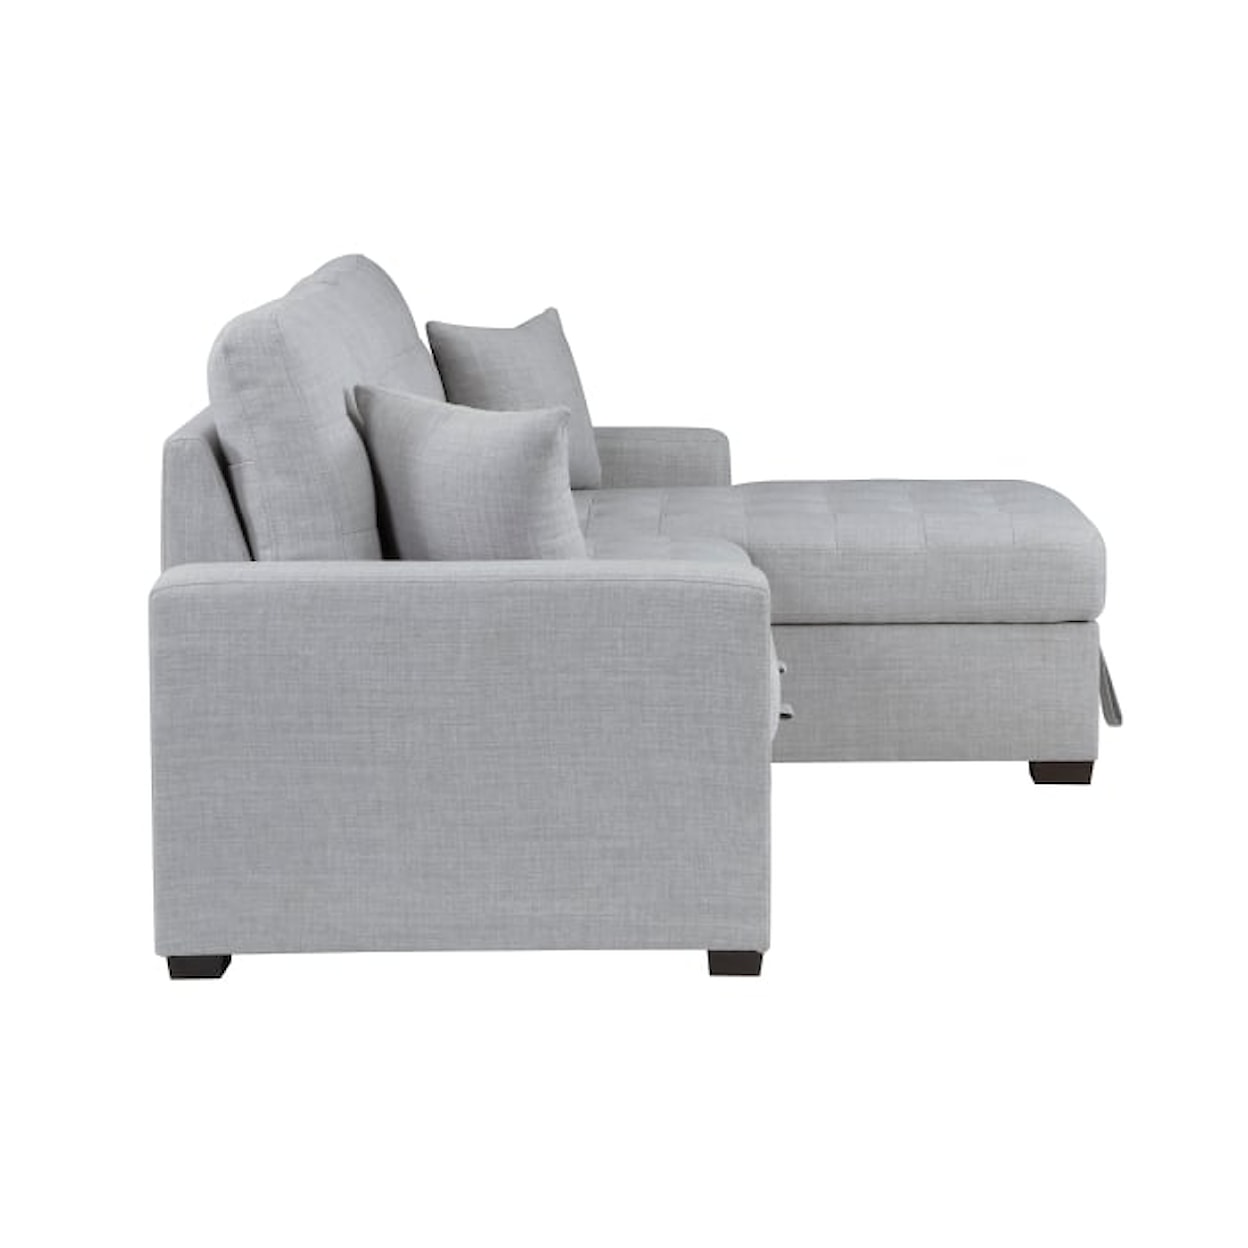 Homelegance Furniture McCafferty Sectional Sofa